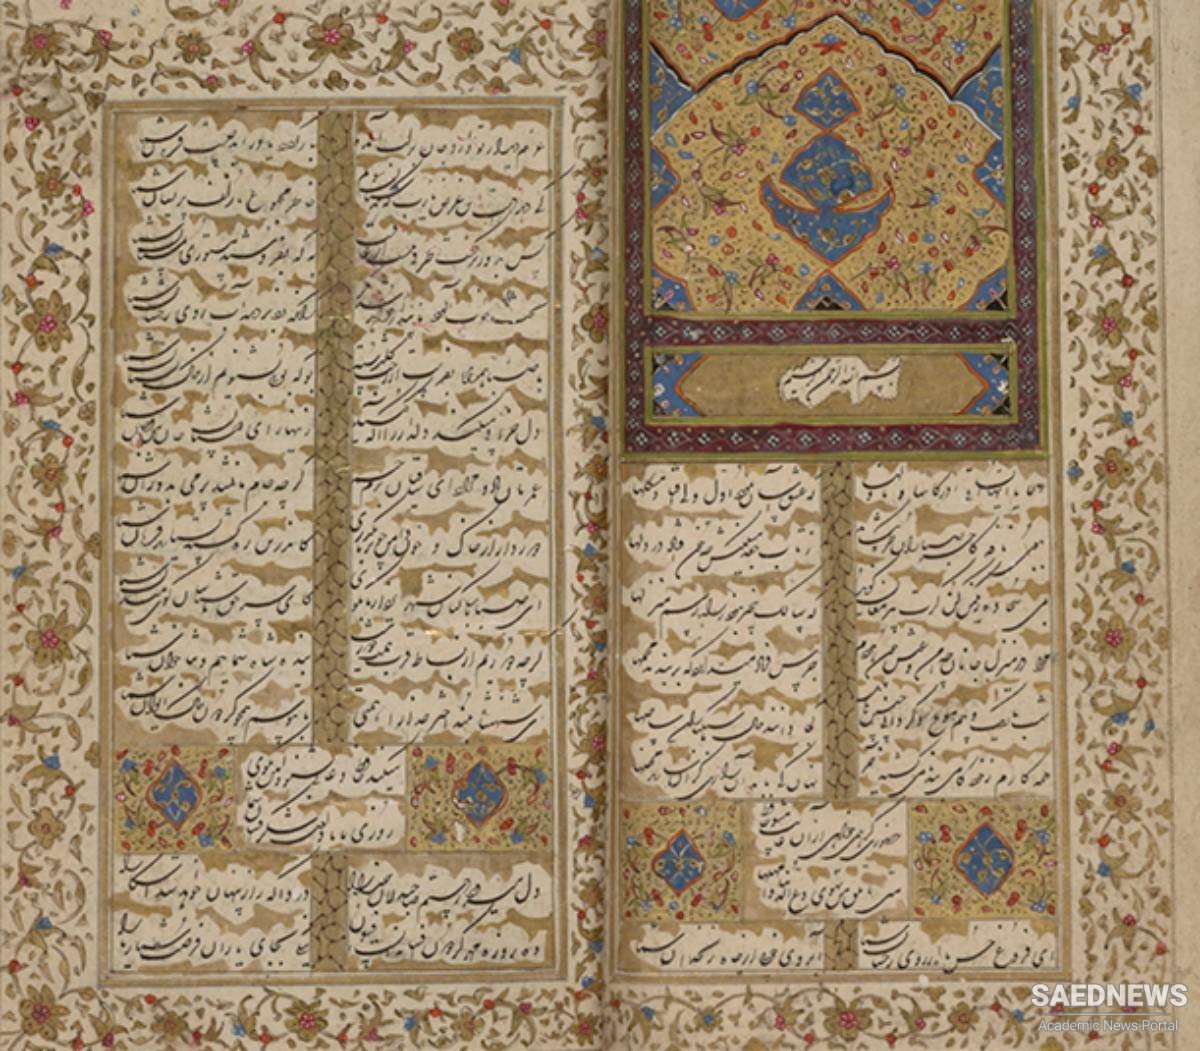 Literature as Part of Islamic Culture